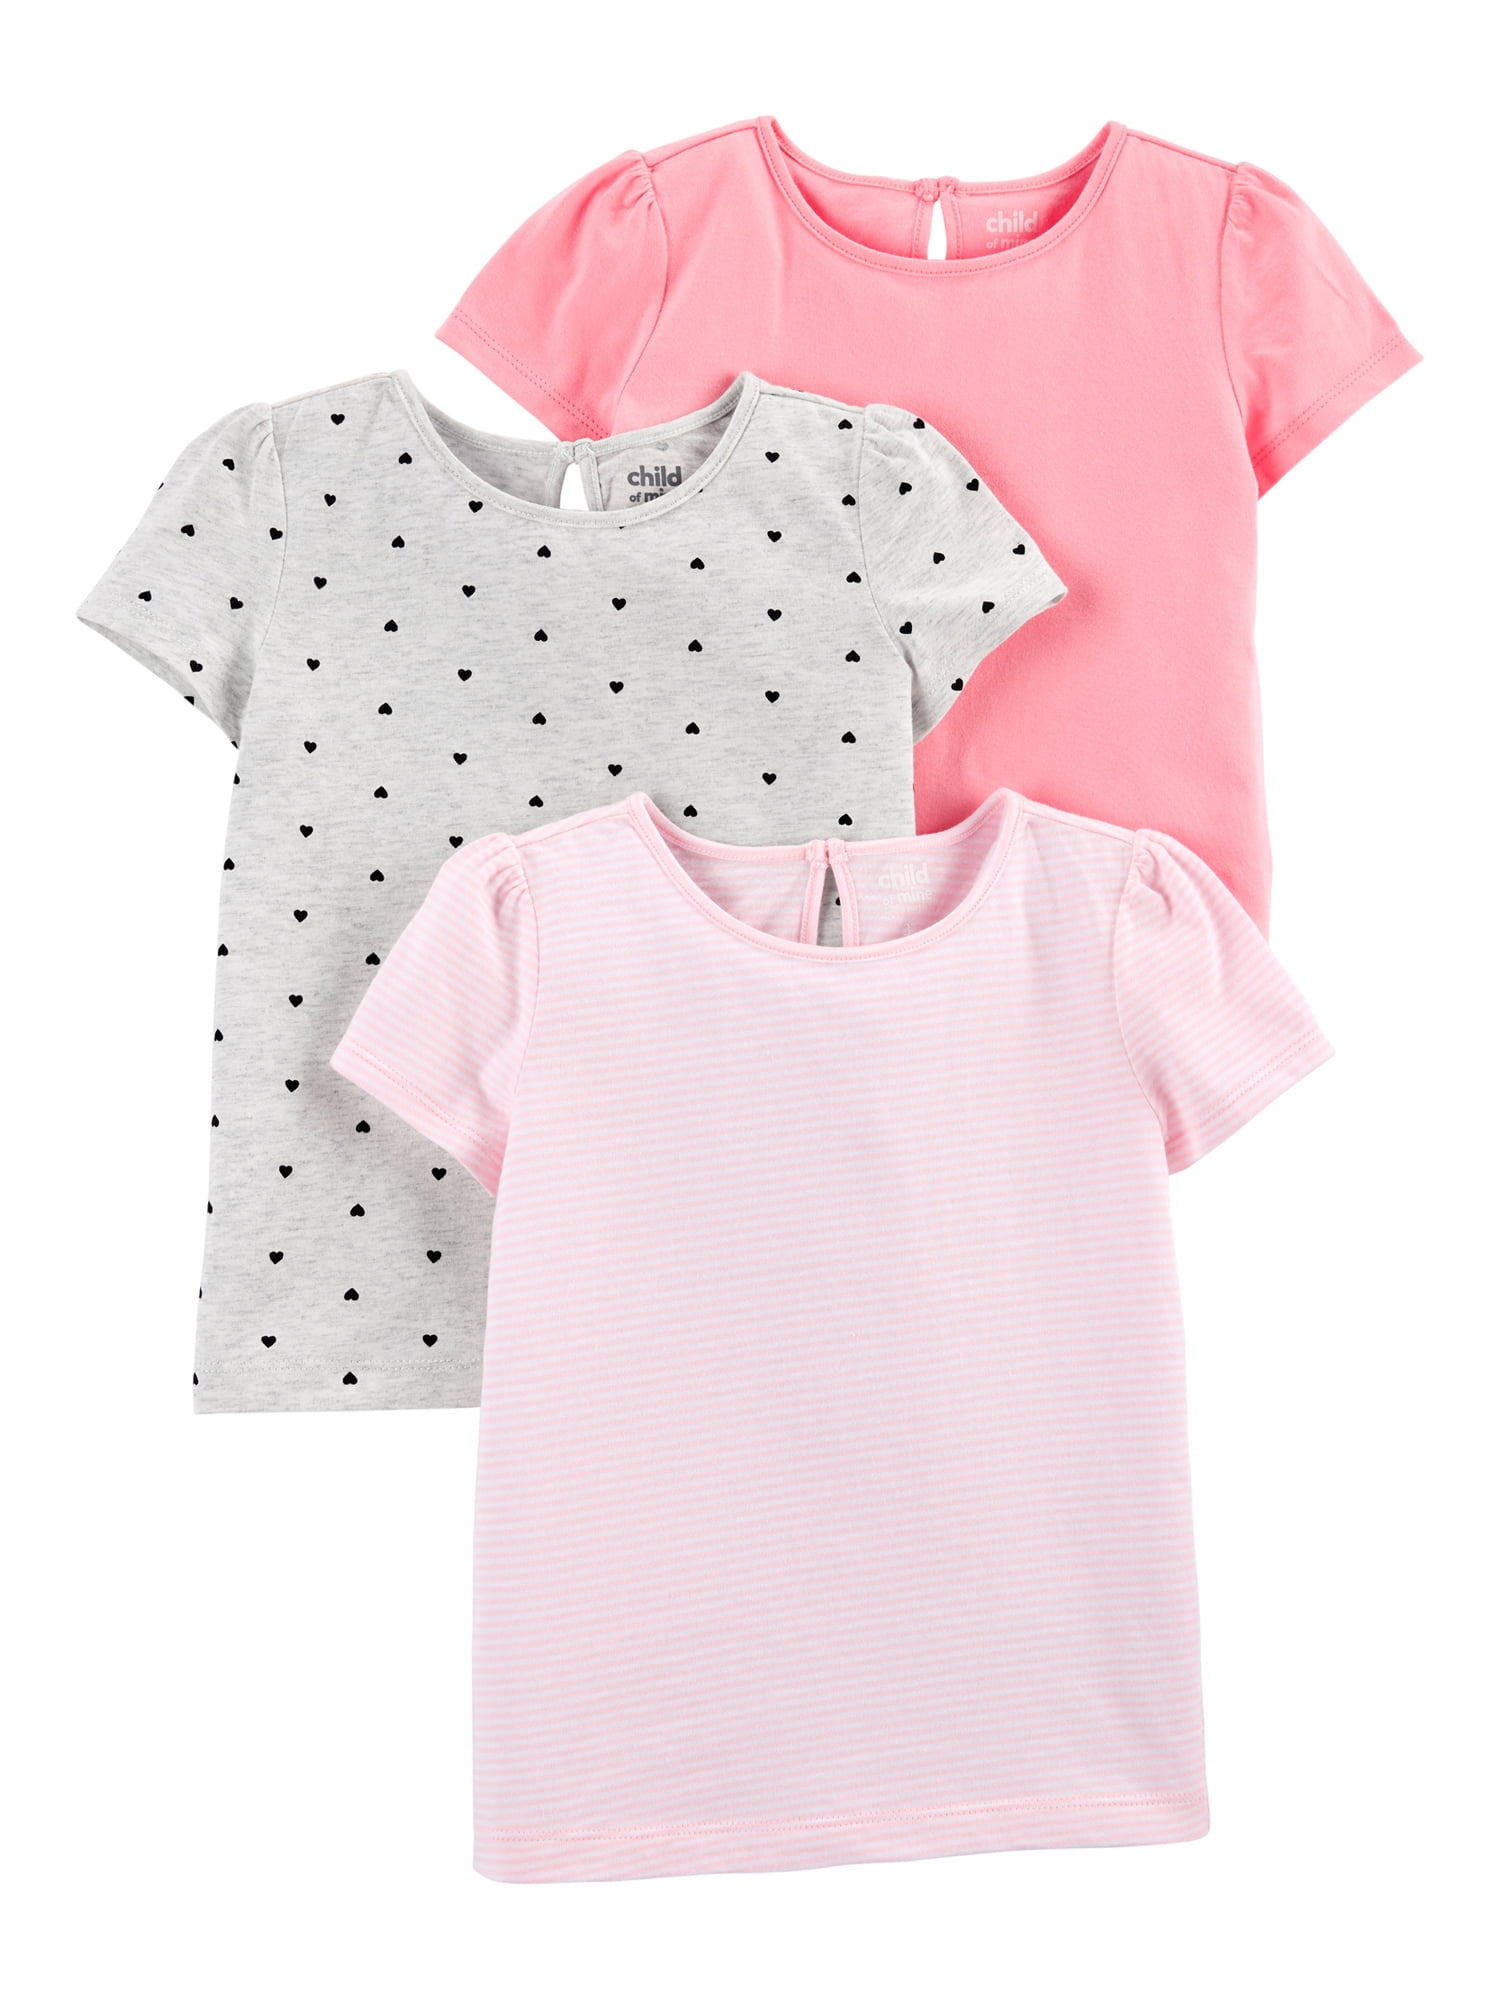 12-18-24-2T-3T-4T-5T BabyGap Infant Toddler Girl Long Sleeve Cotton Shirt Top 